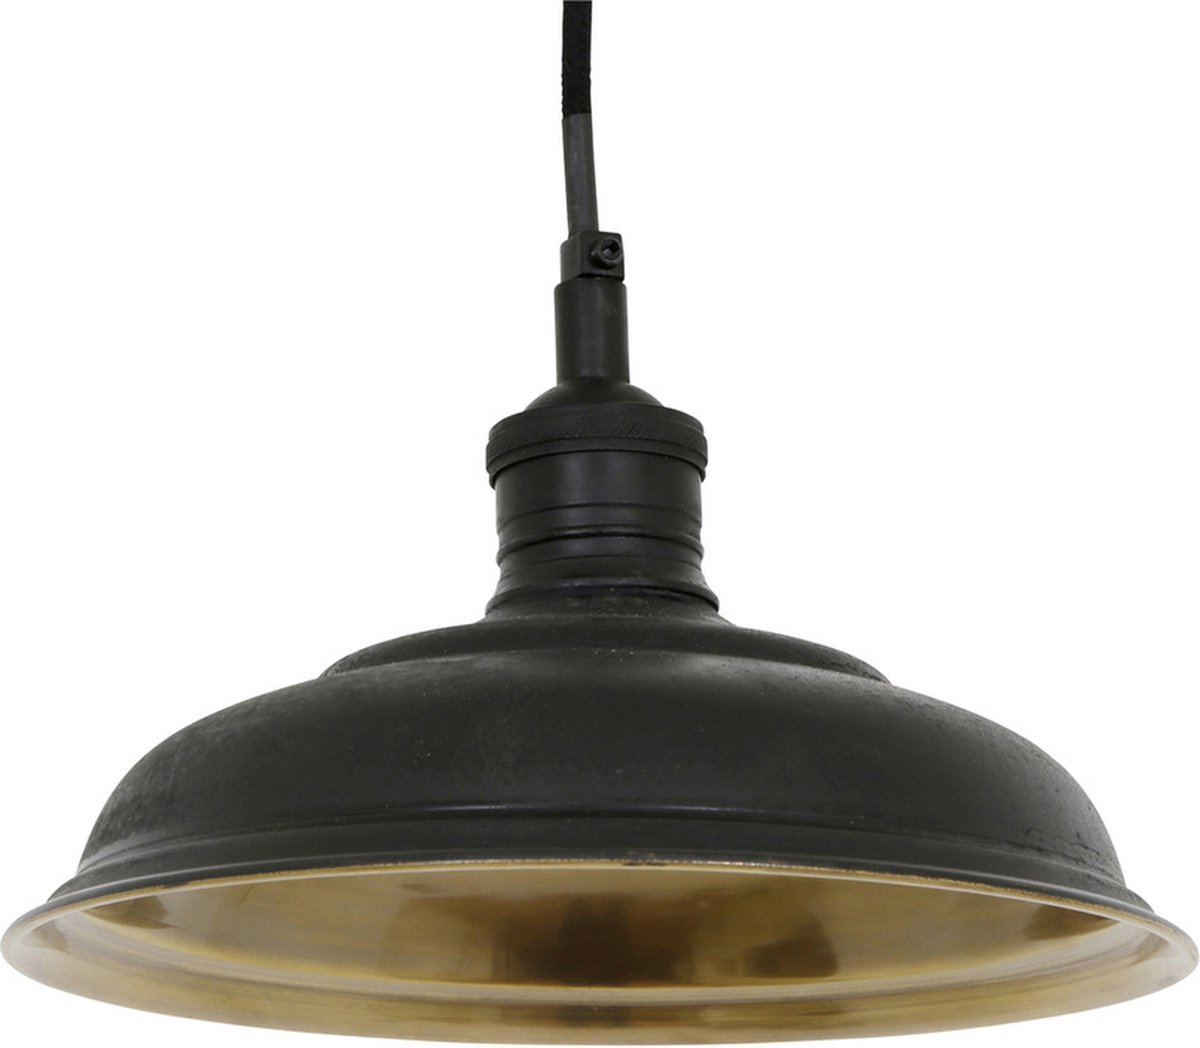 Ducasse Medium Hanglamp Antiek Zwart